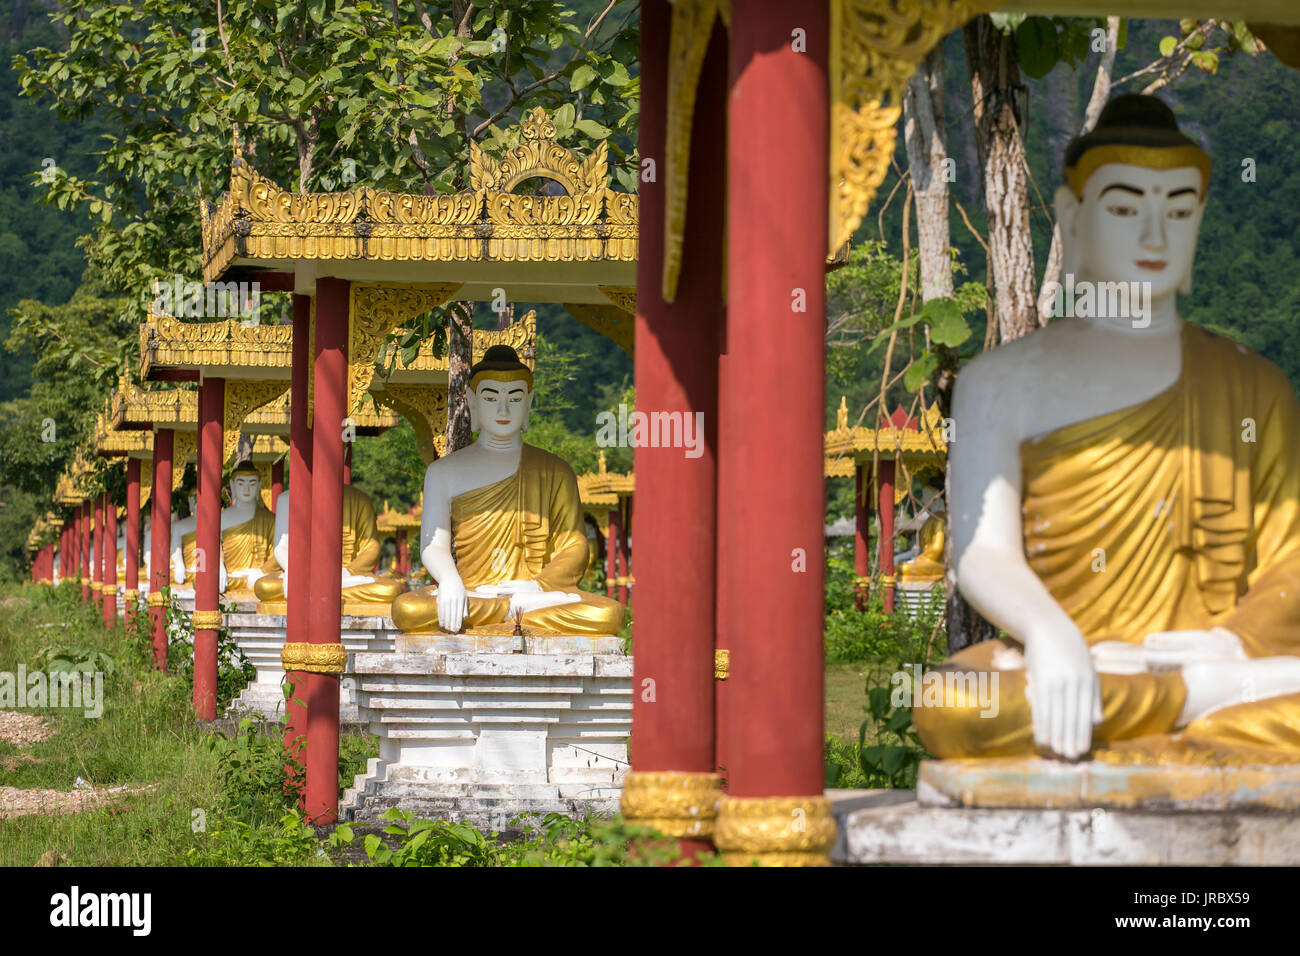 Molte statue di Buddha nei pressi di Hpa-an in Myanmar Foto Stock